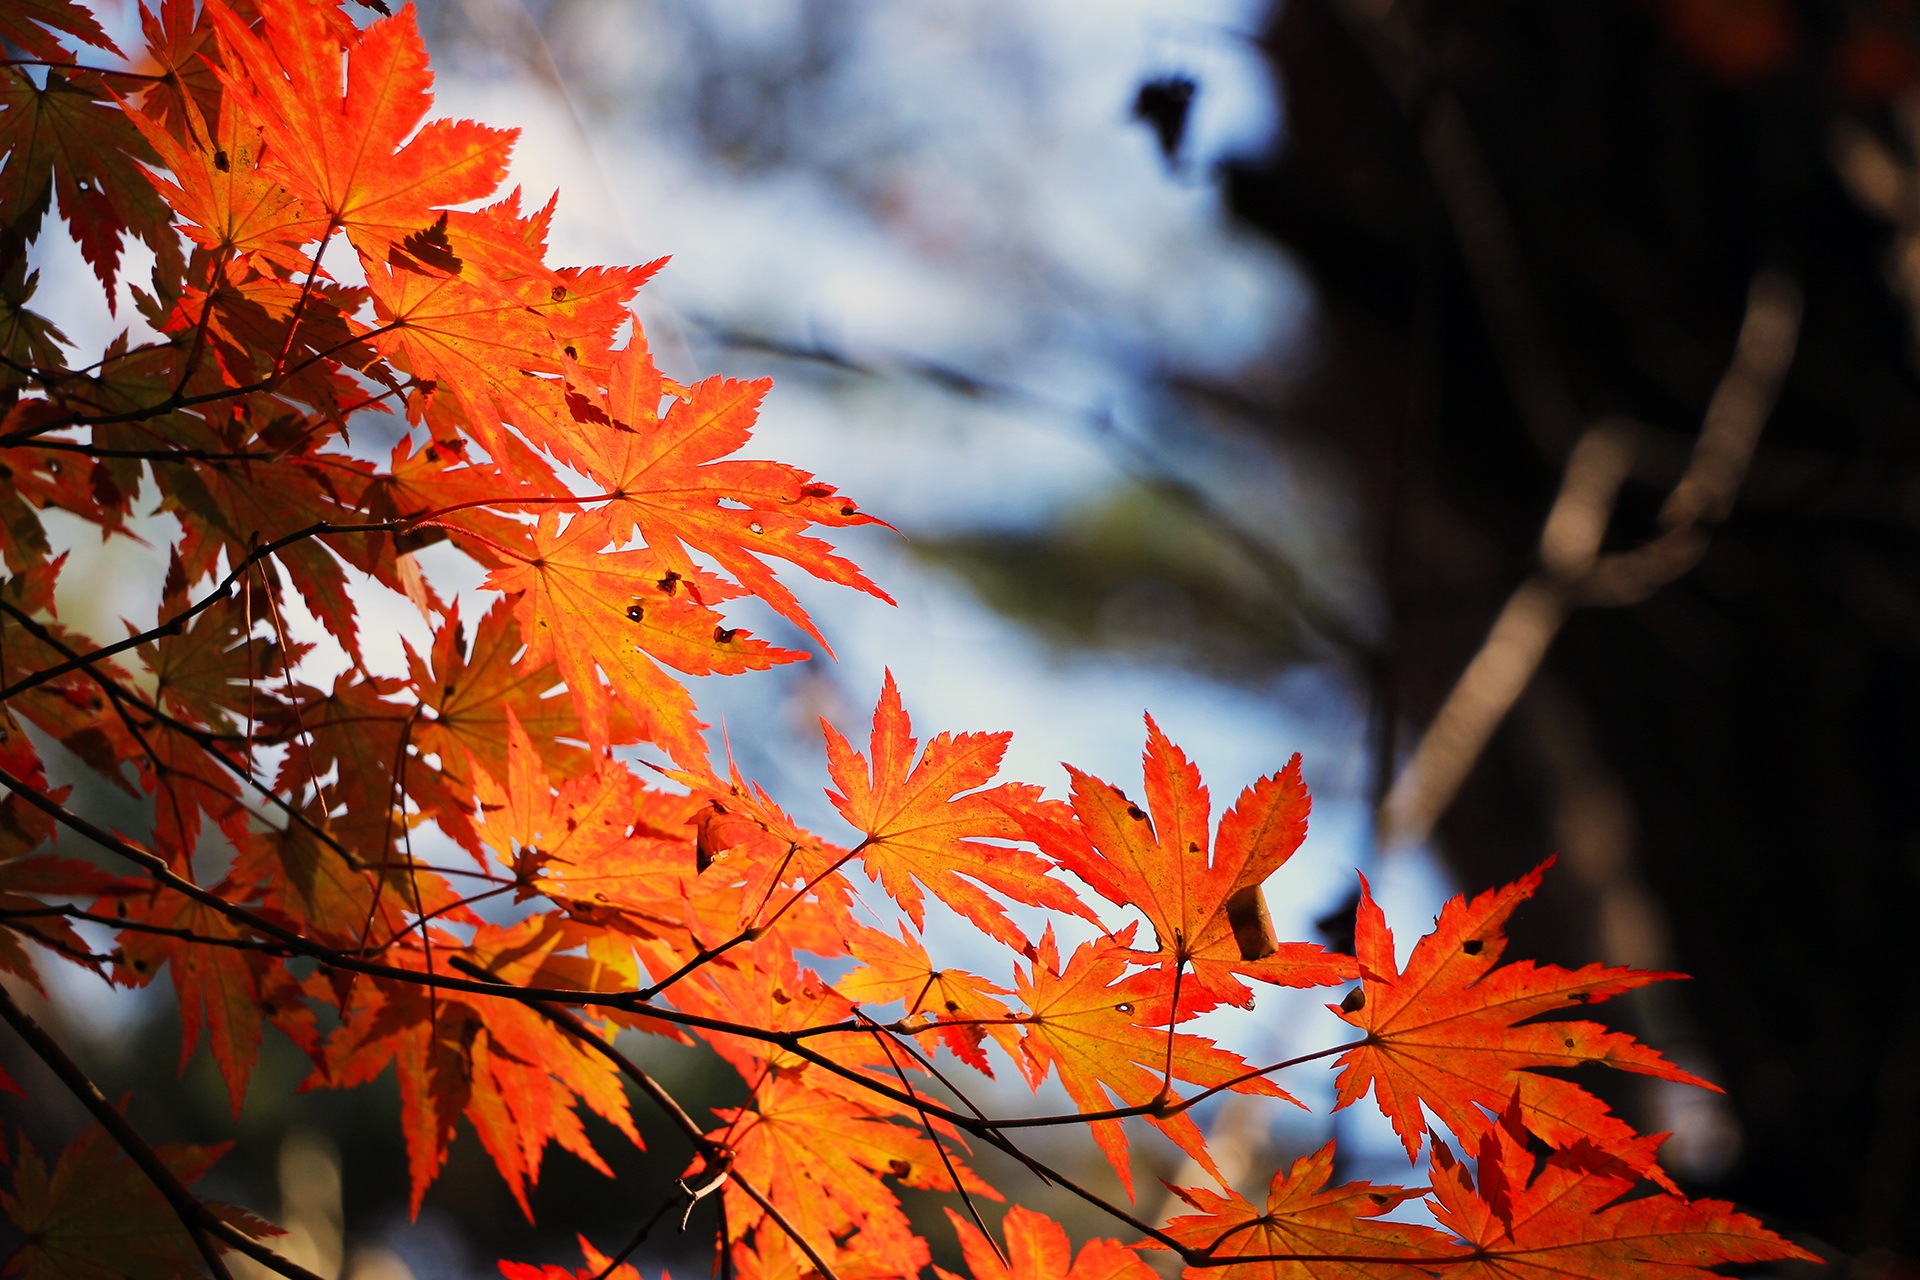 branch of maple leaves turning autumnal orange